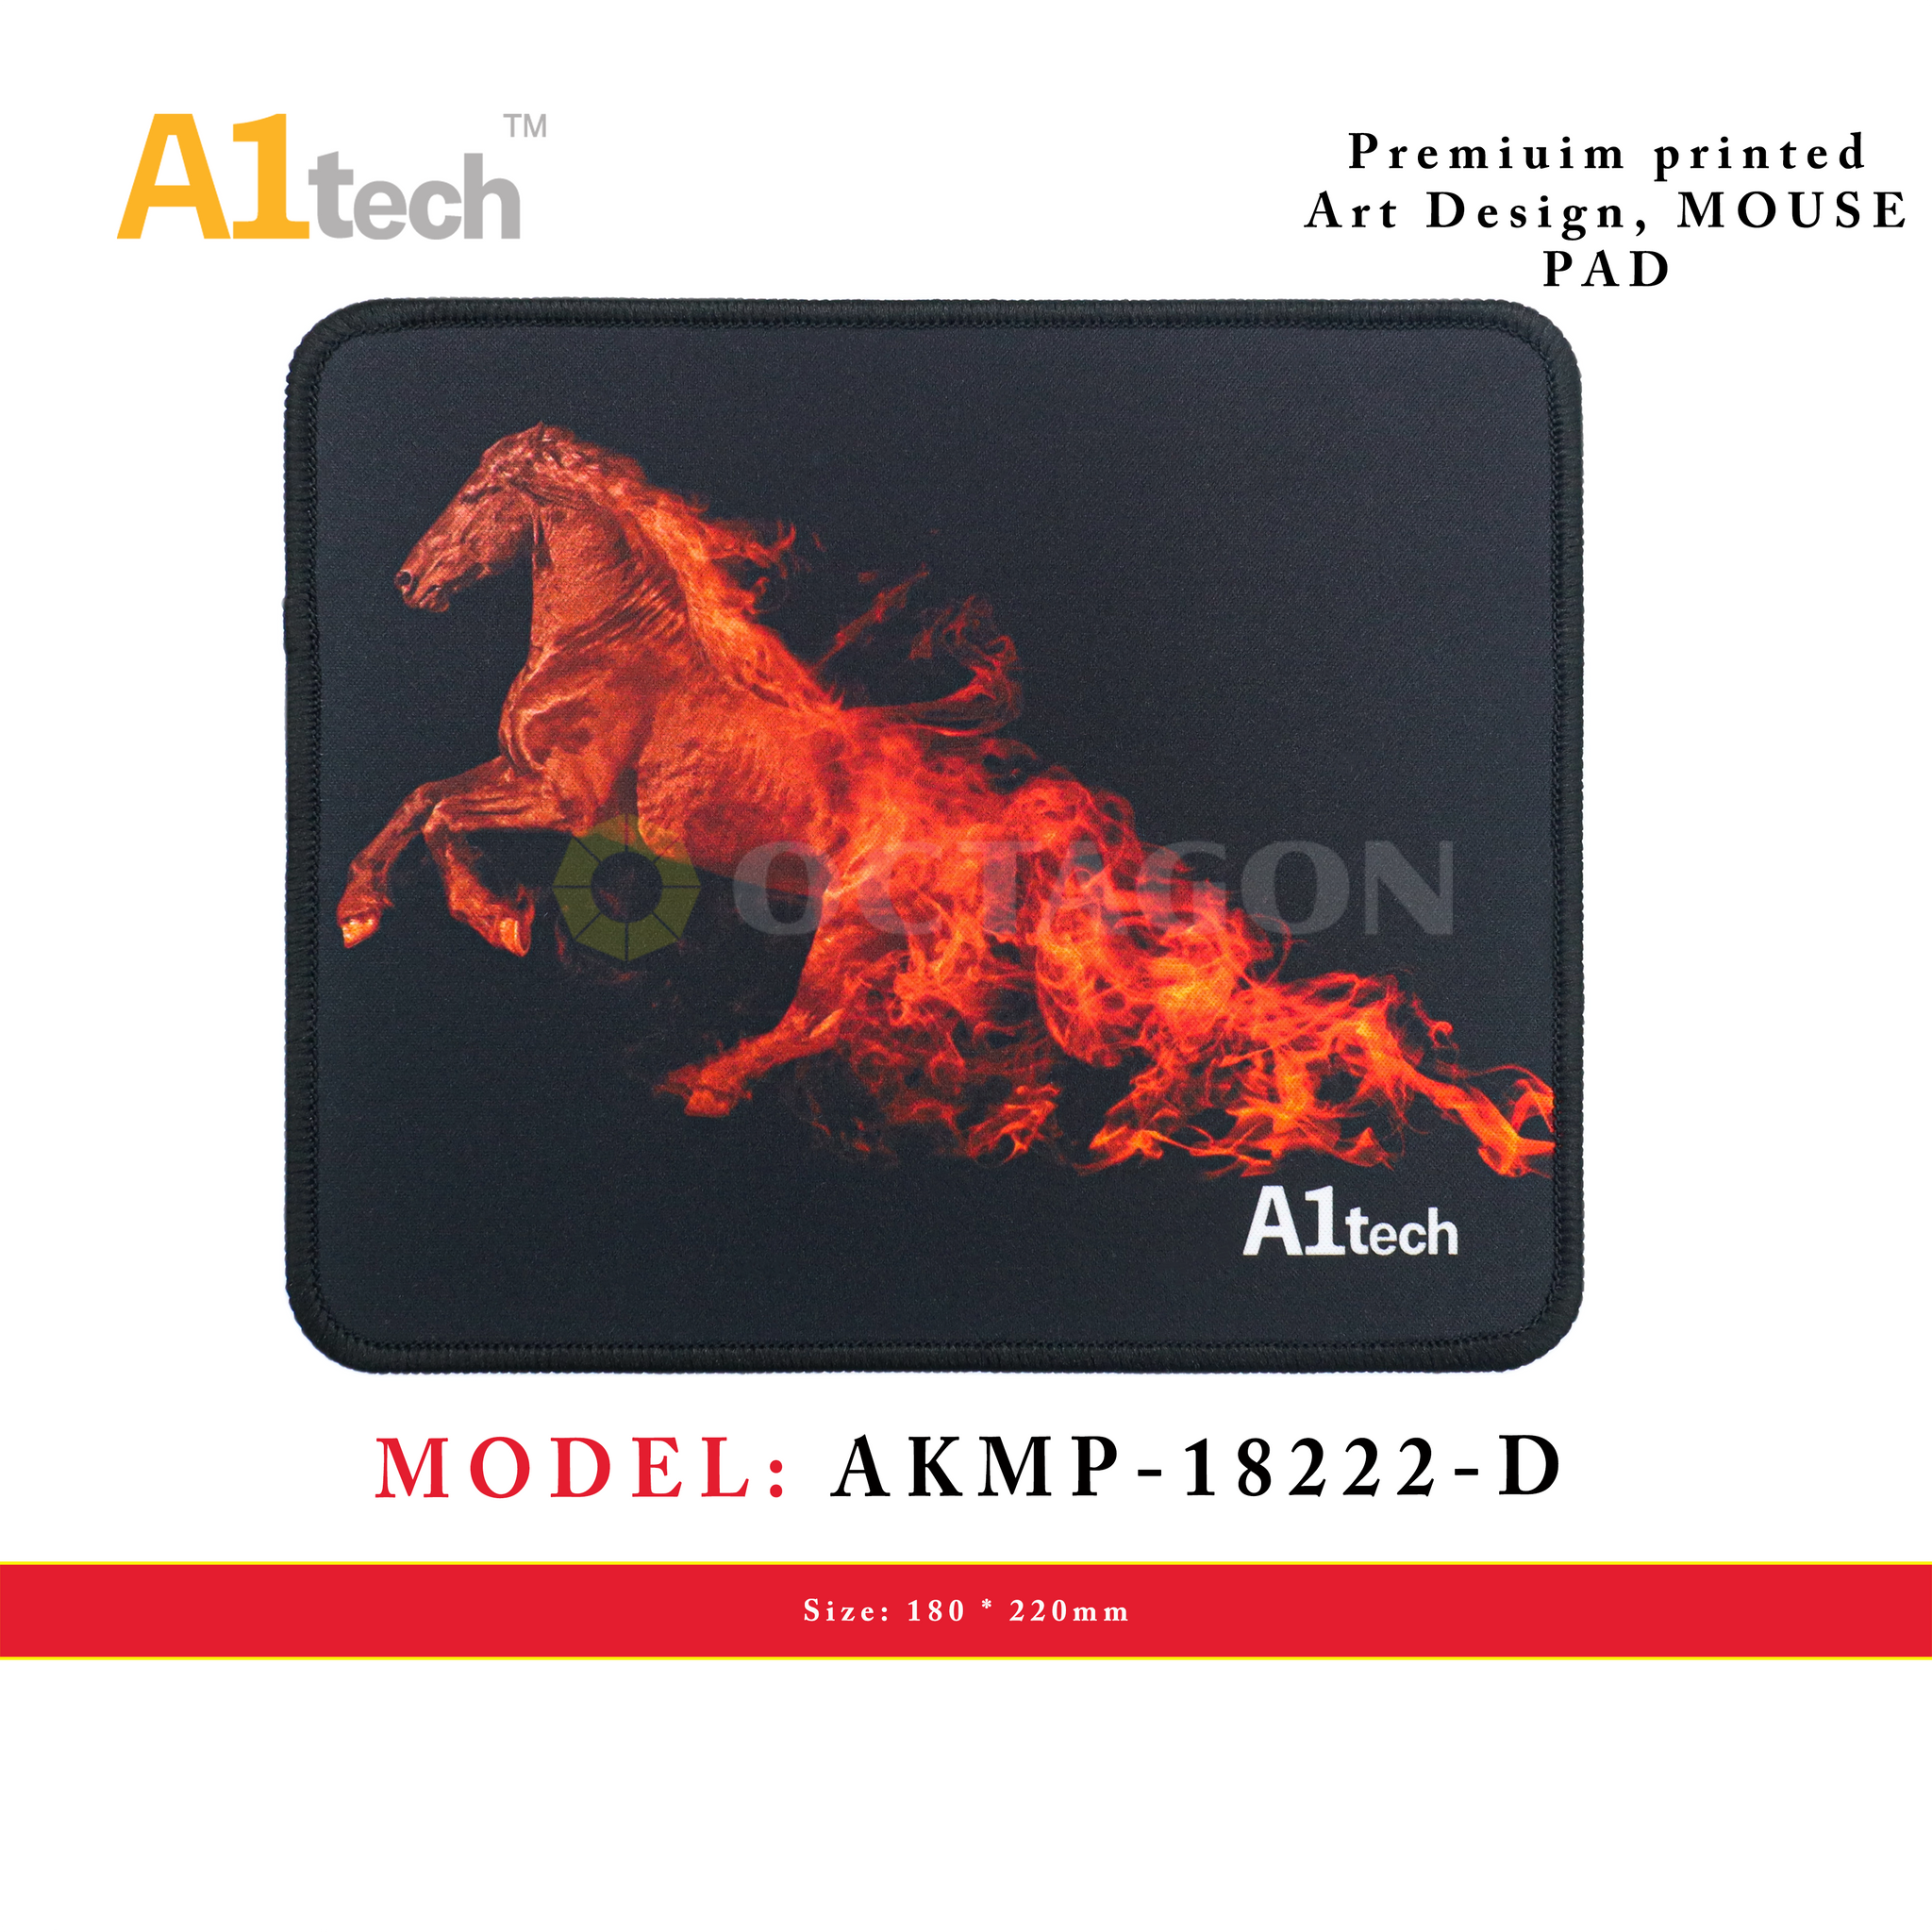 A1TECH AKMP-18222-D MOUSE PAD